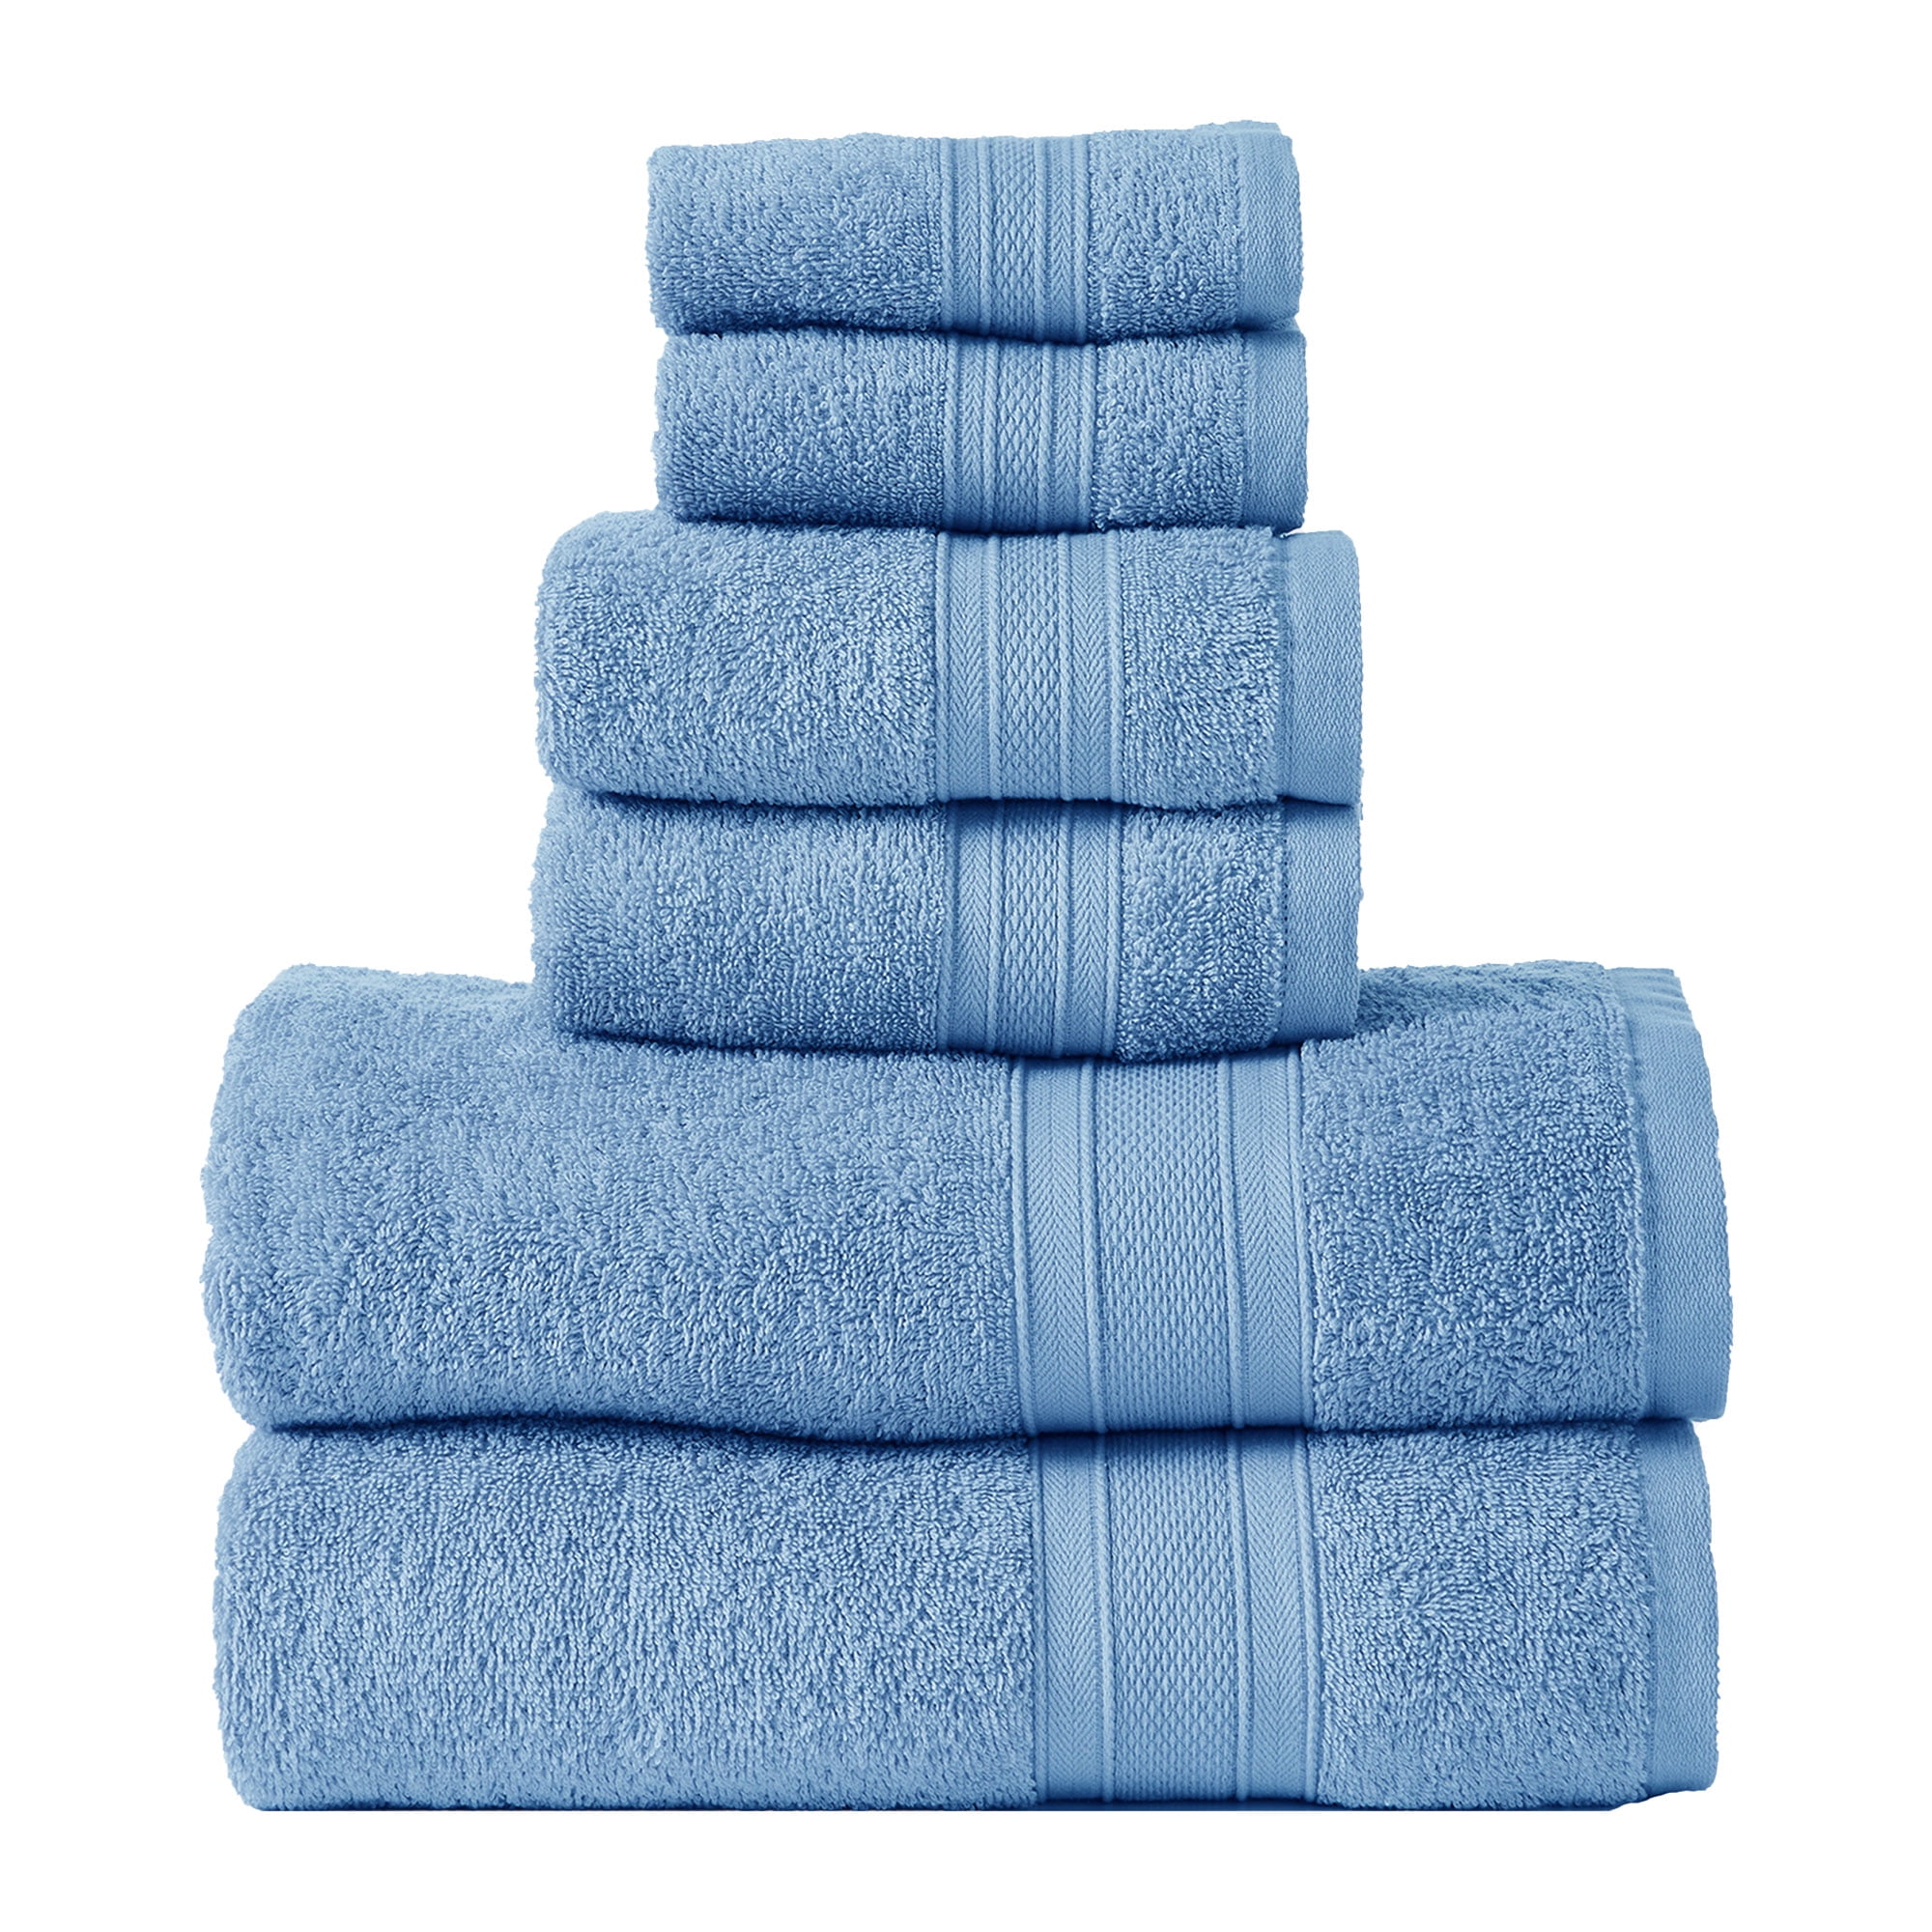 4 PCS Size 53 x 26 Inch Combed Cotton Towels Blue Super Soft Super Absorbent 